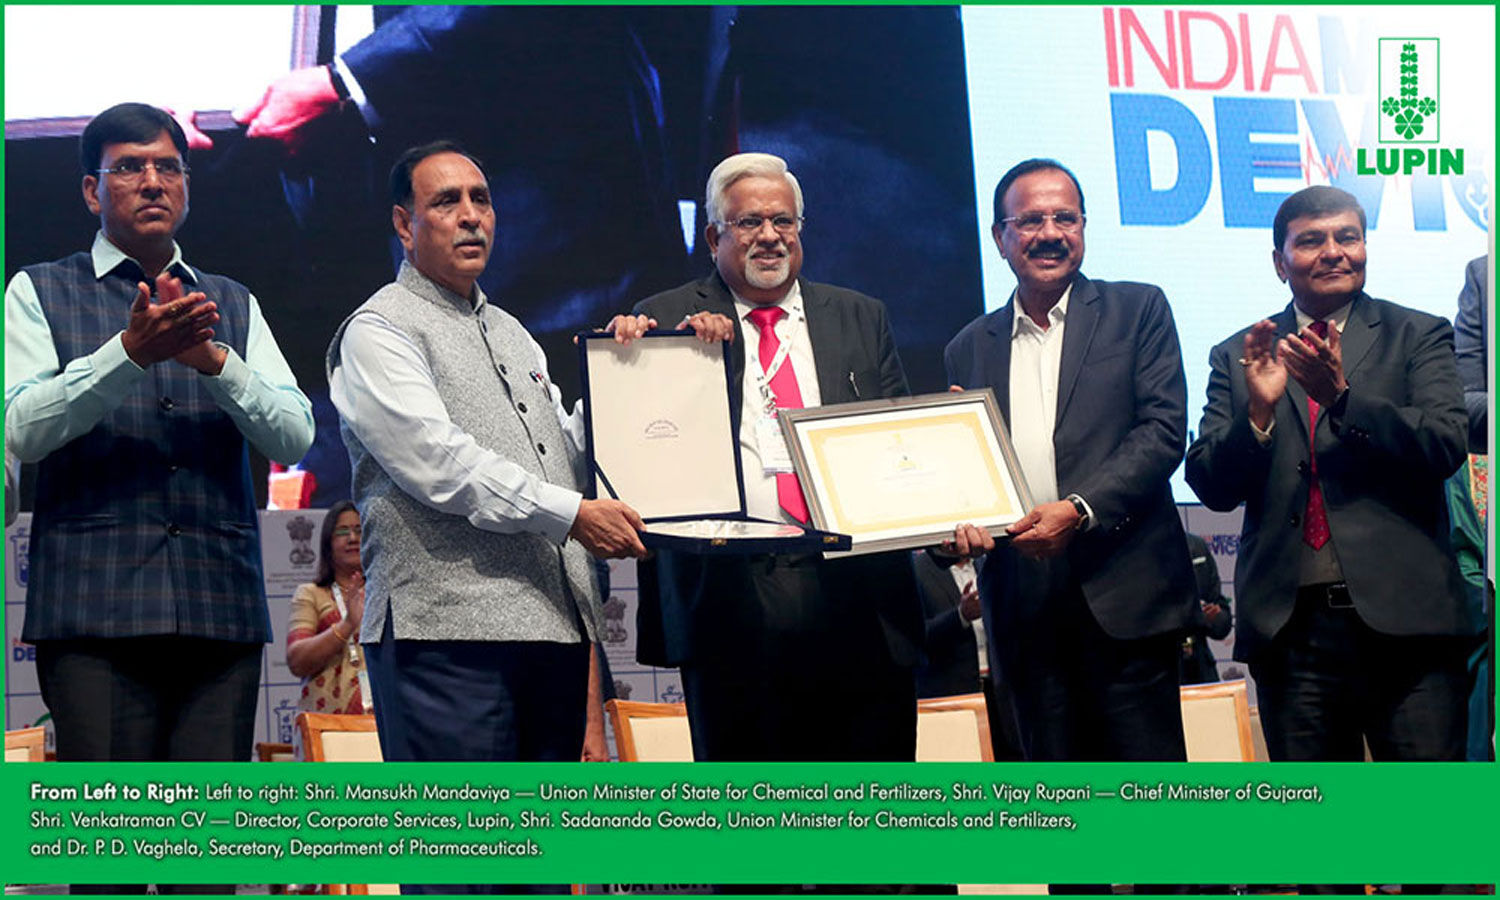 Lupin bags India Pharma Leader Award at India Pharma 2020 and India Medical Device 2020 Conference